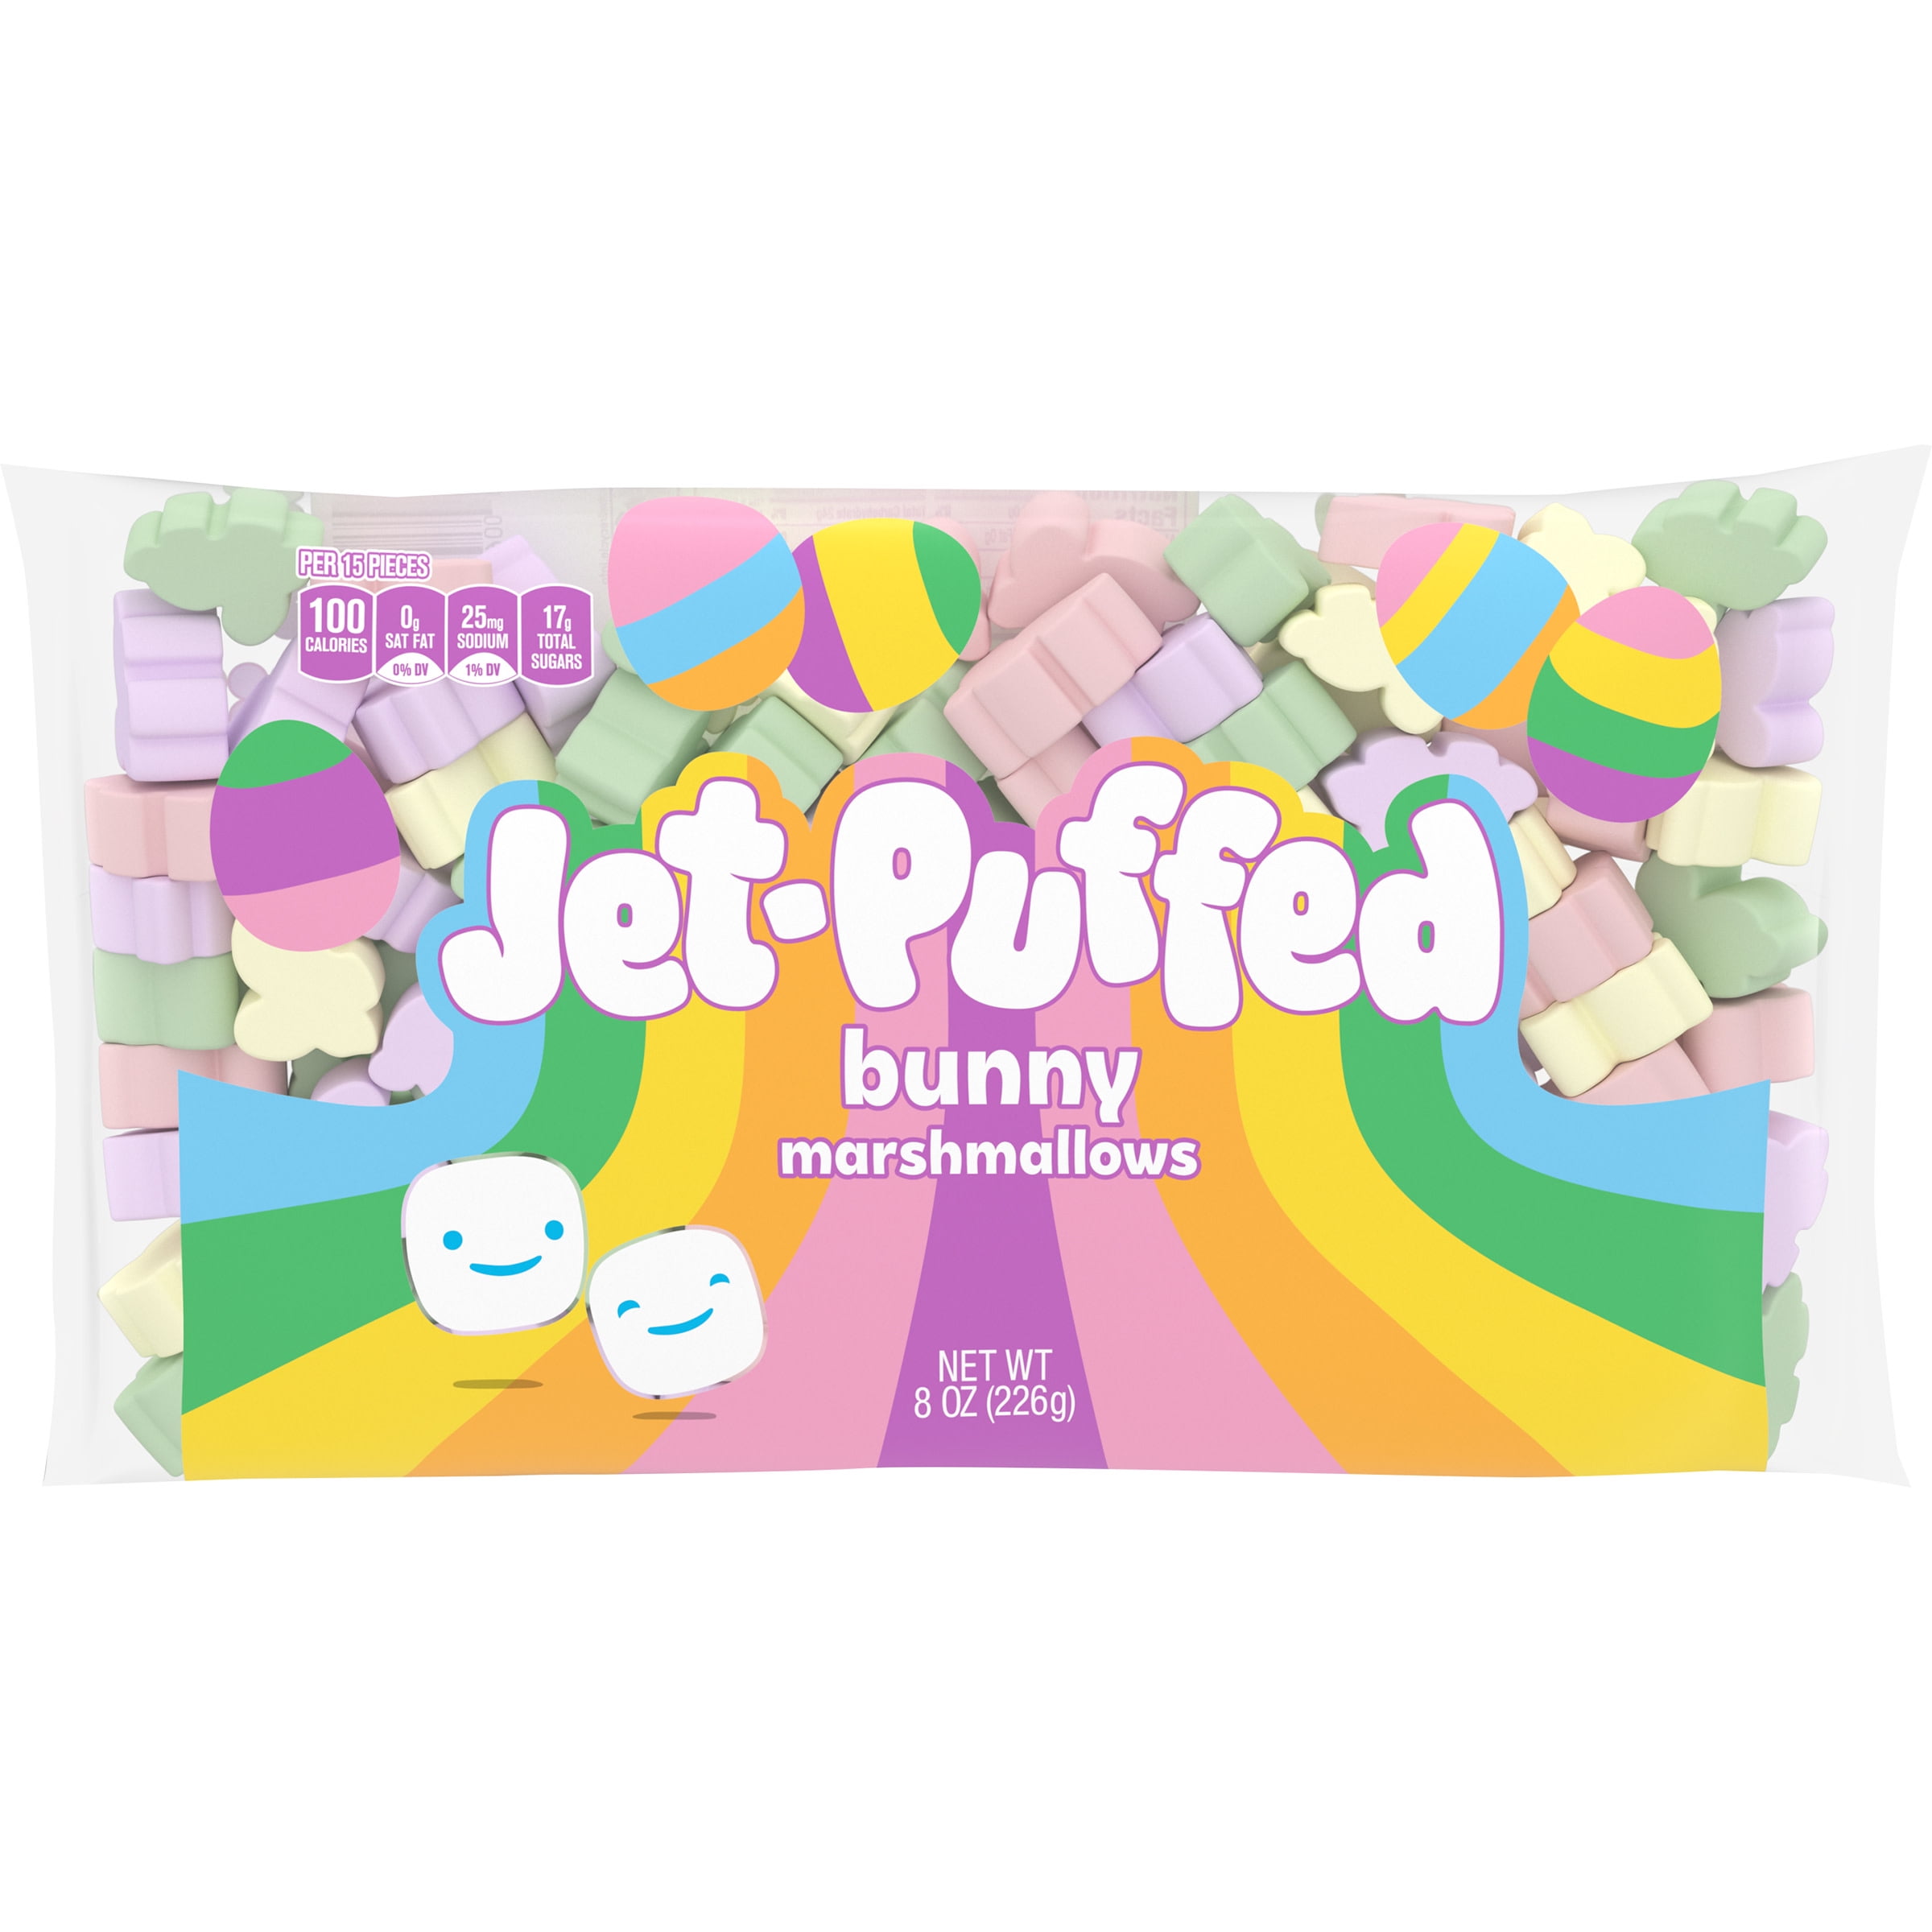 Jet-Puffed Heart Marshmallow Shapes 8 oz Bag